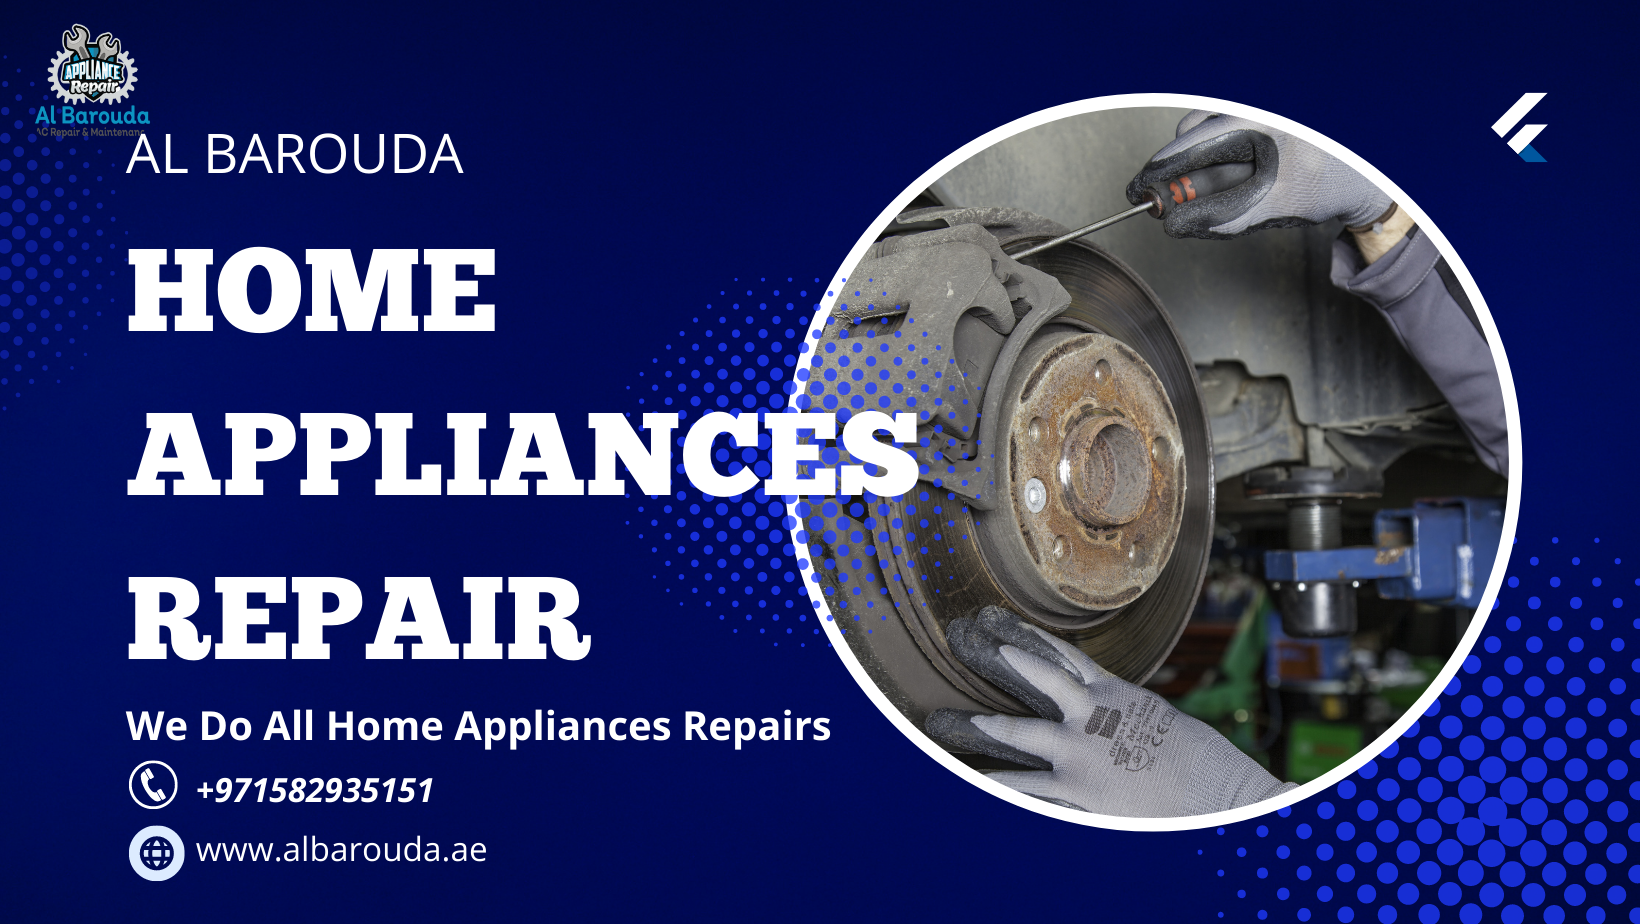 Al Barouda Home Appliance Repair Service in UAE